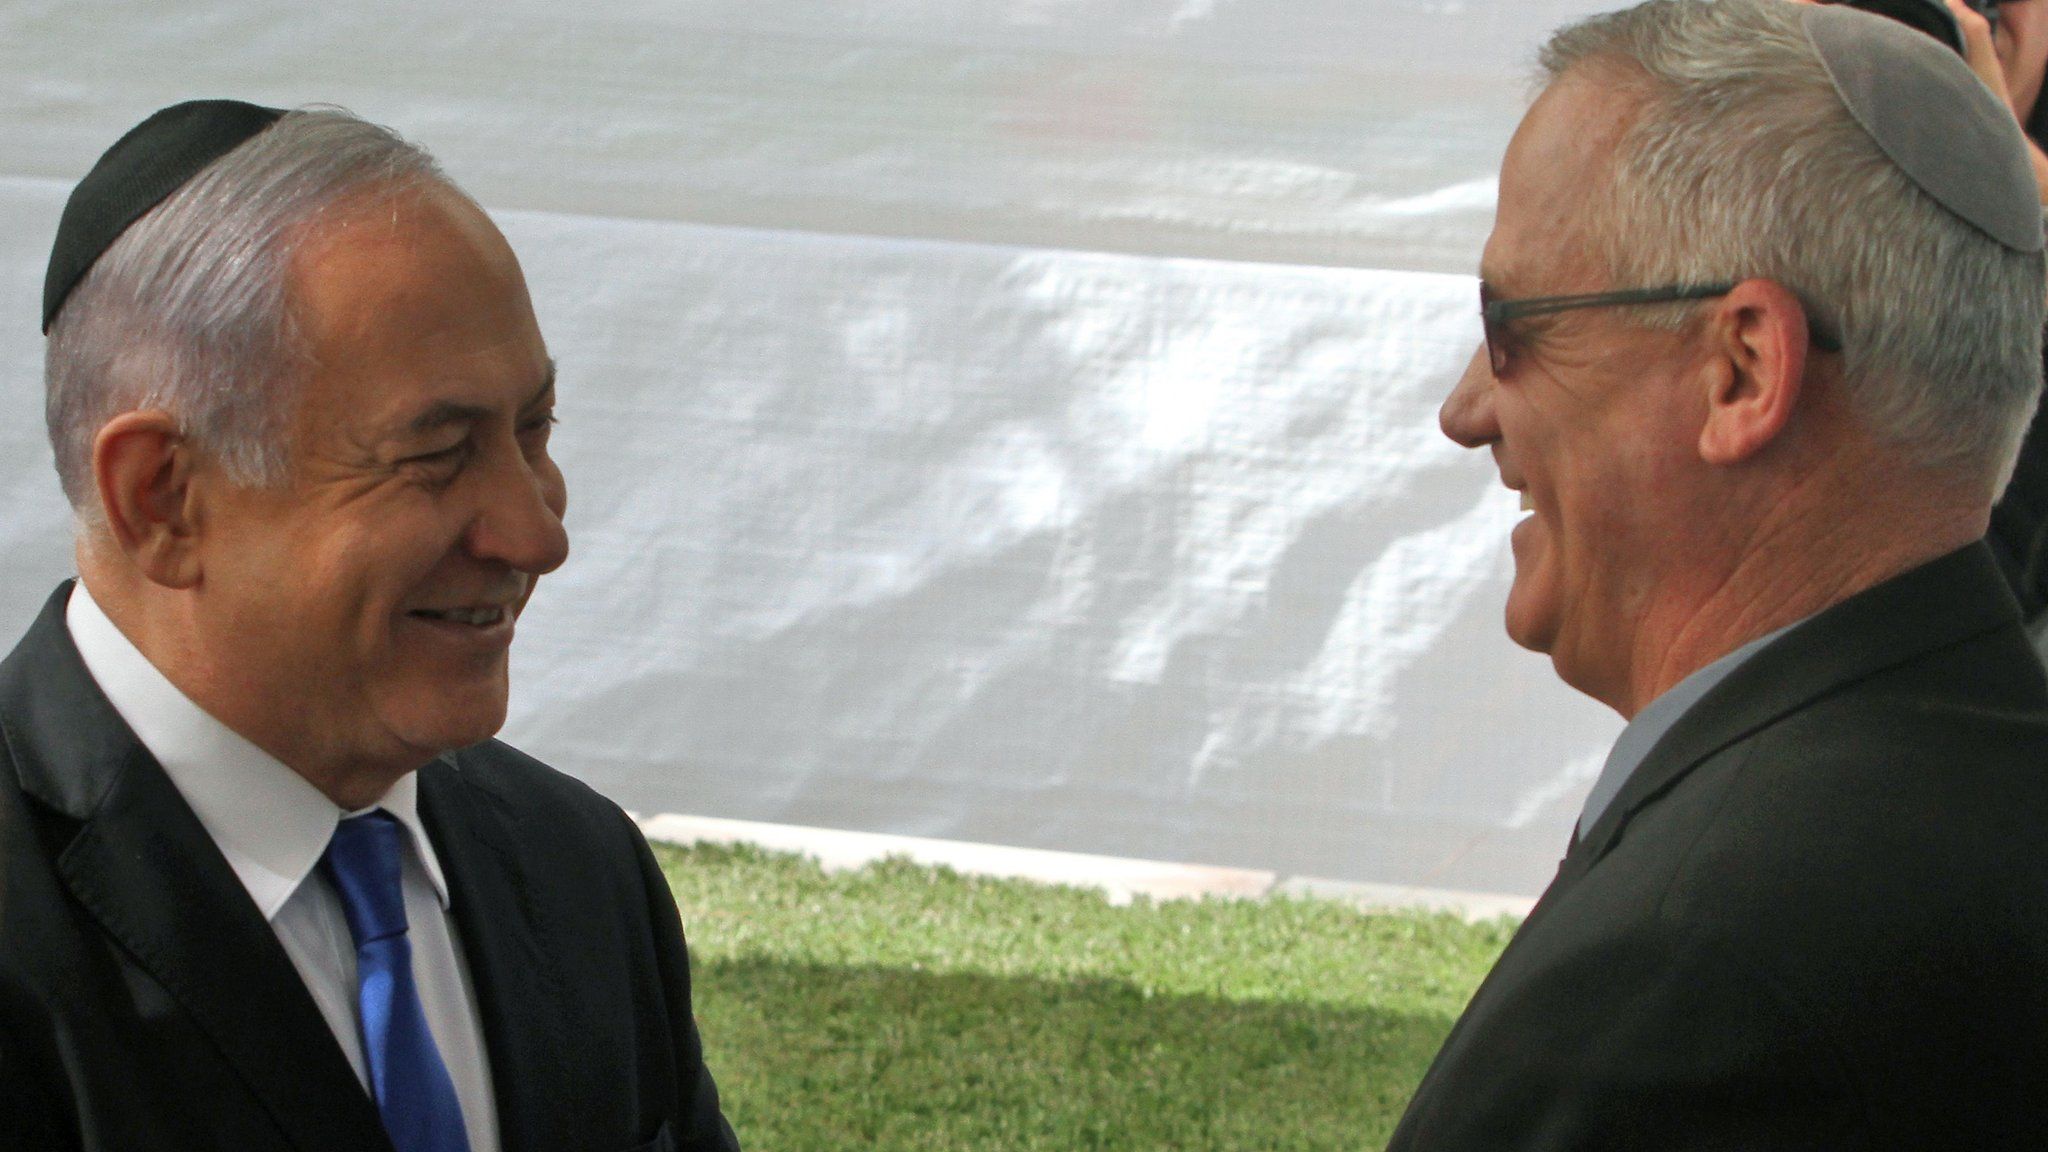 Benjamin Netanyahu shakes hands with Benny Gantz at Mount Herzl in Jerusalem on 19 September 2019